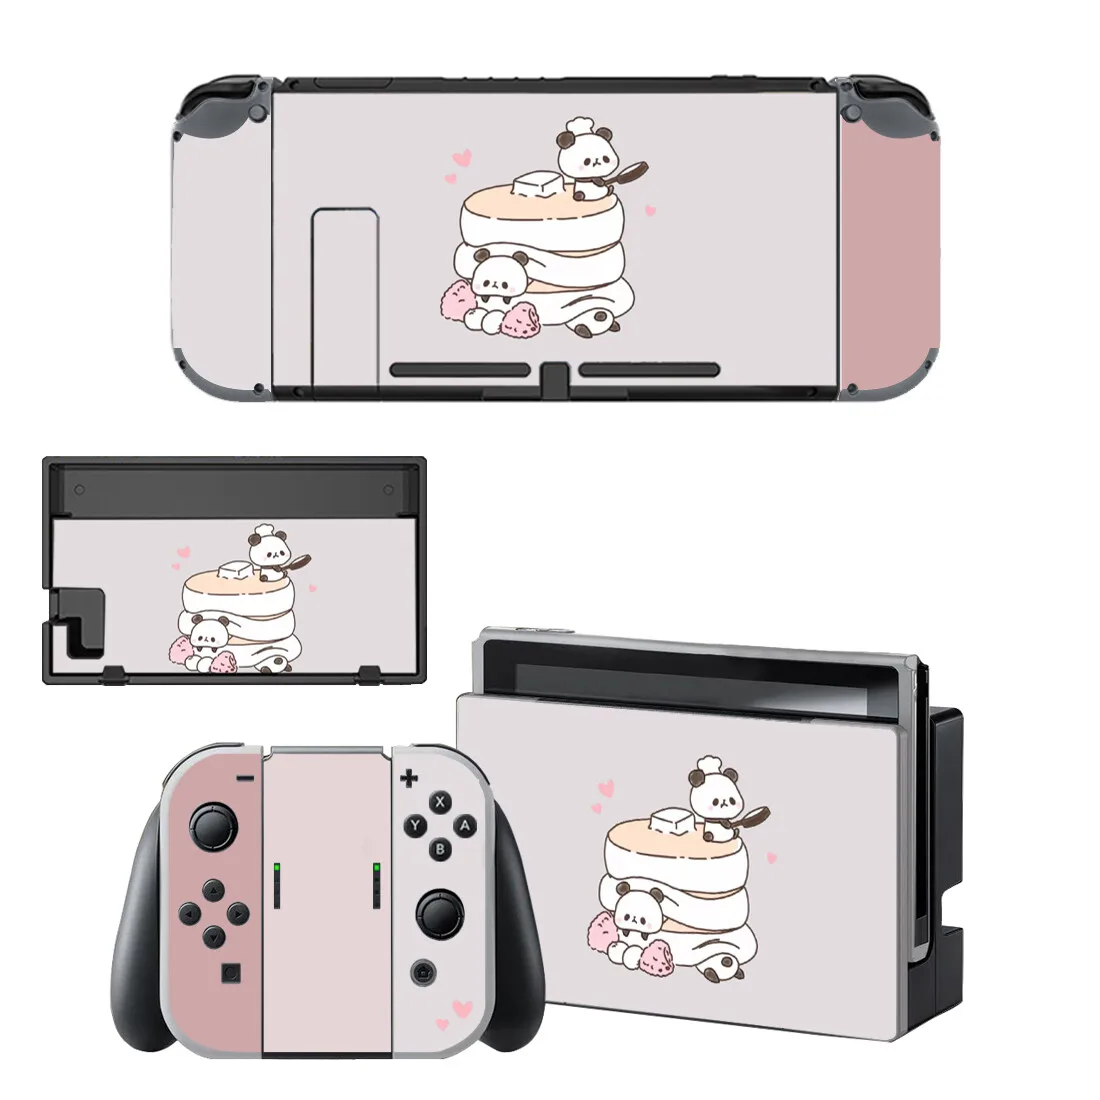 Cute Panda Nintendo Switch Skin Sticker NintendoSwitch stickers skins for Nintend Switch Console and Joy-Con Controller